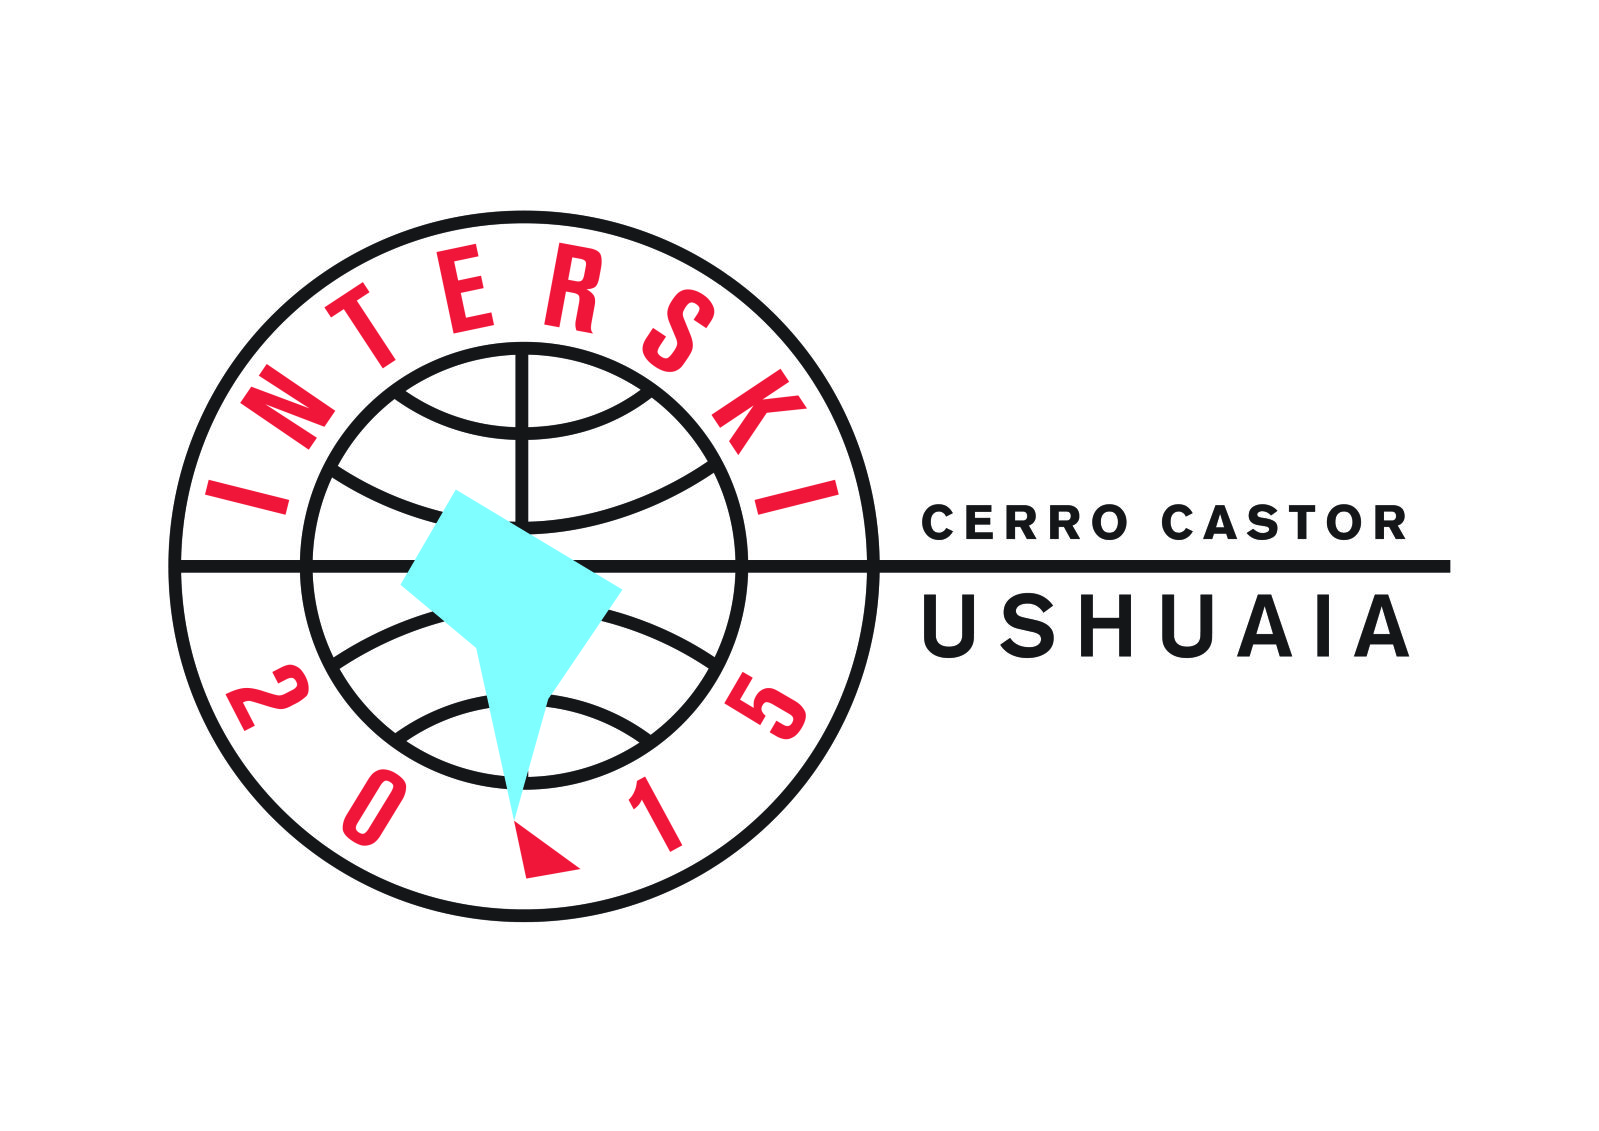 INTERSKI-LOGO-USHUAIA-CERRO-CASTOR-ARGENTINA-2015.jpg